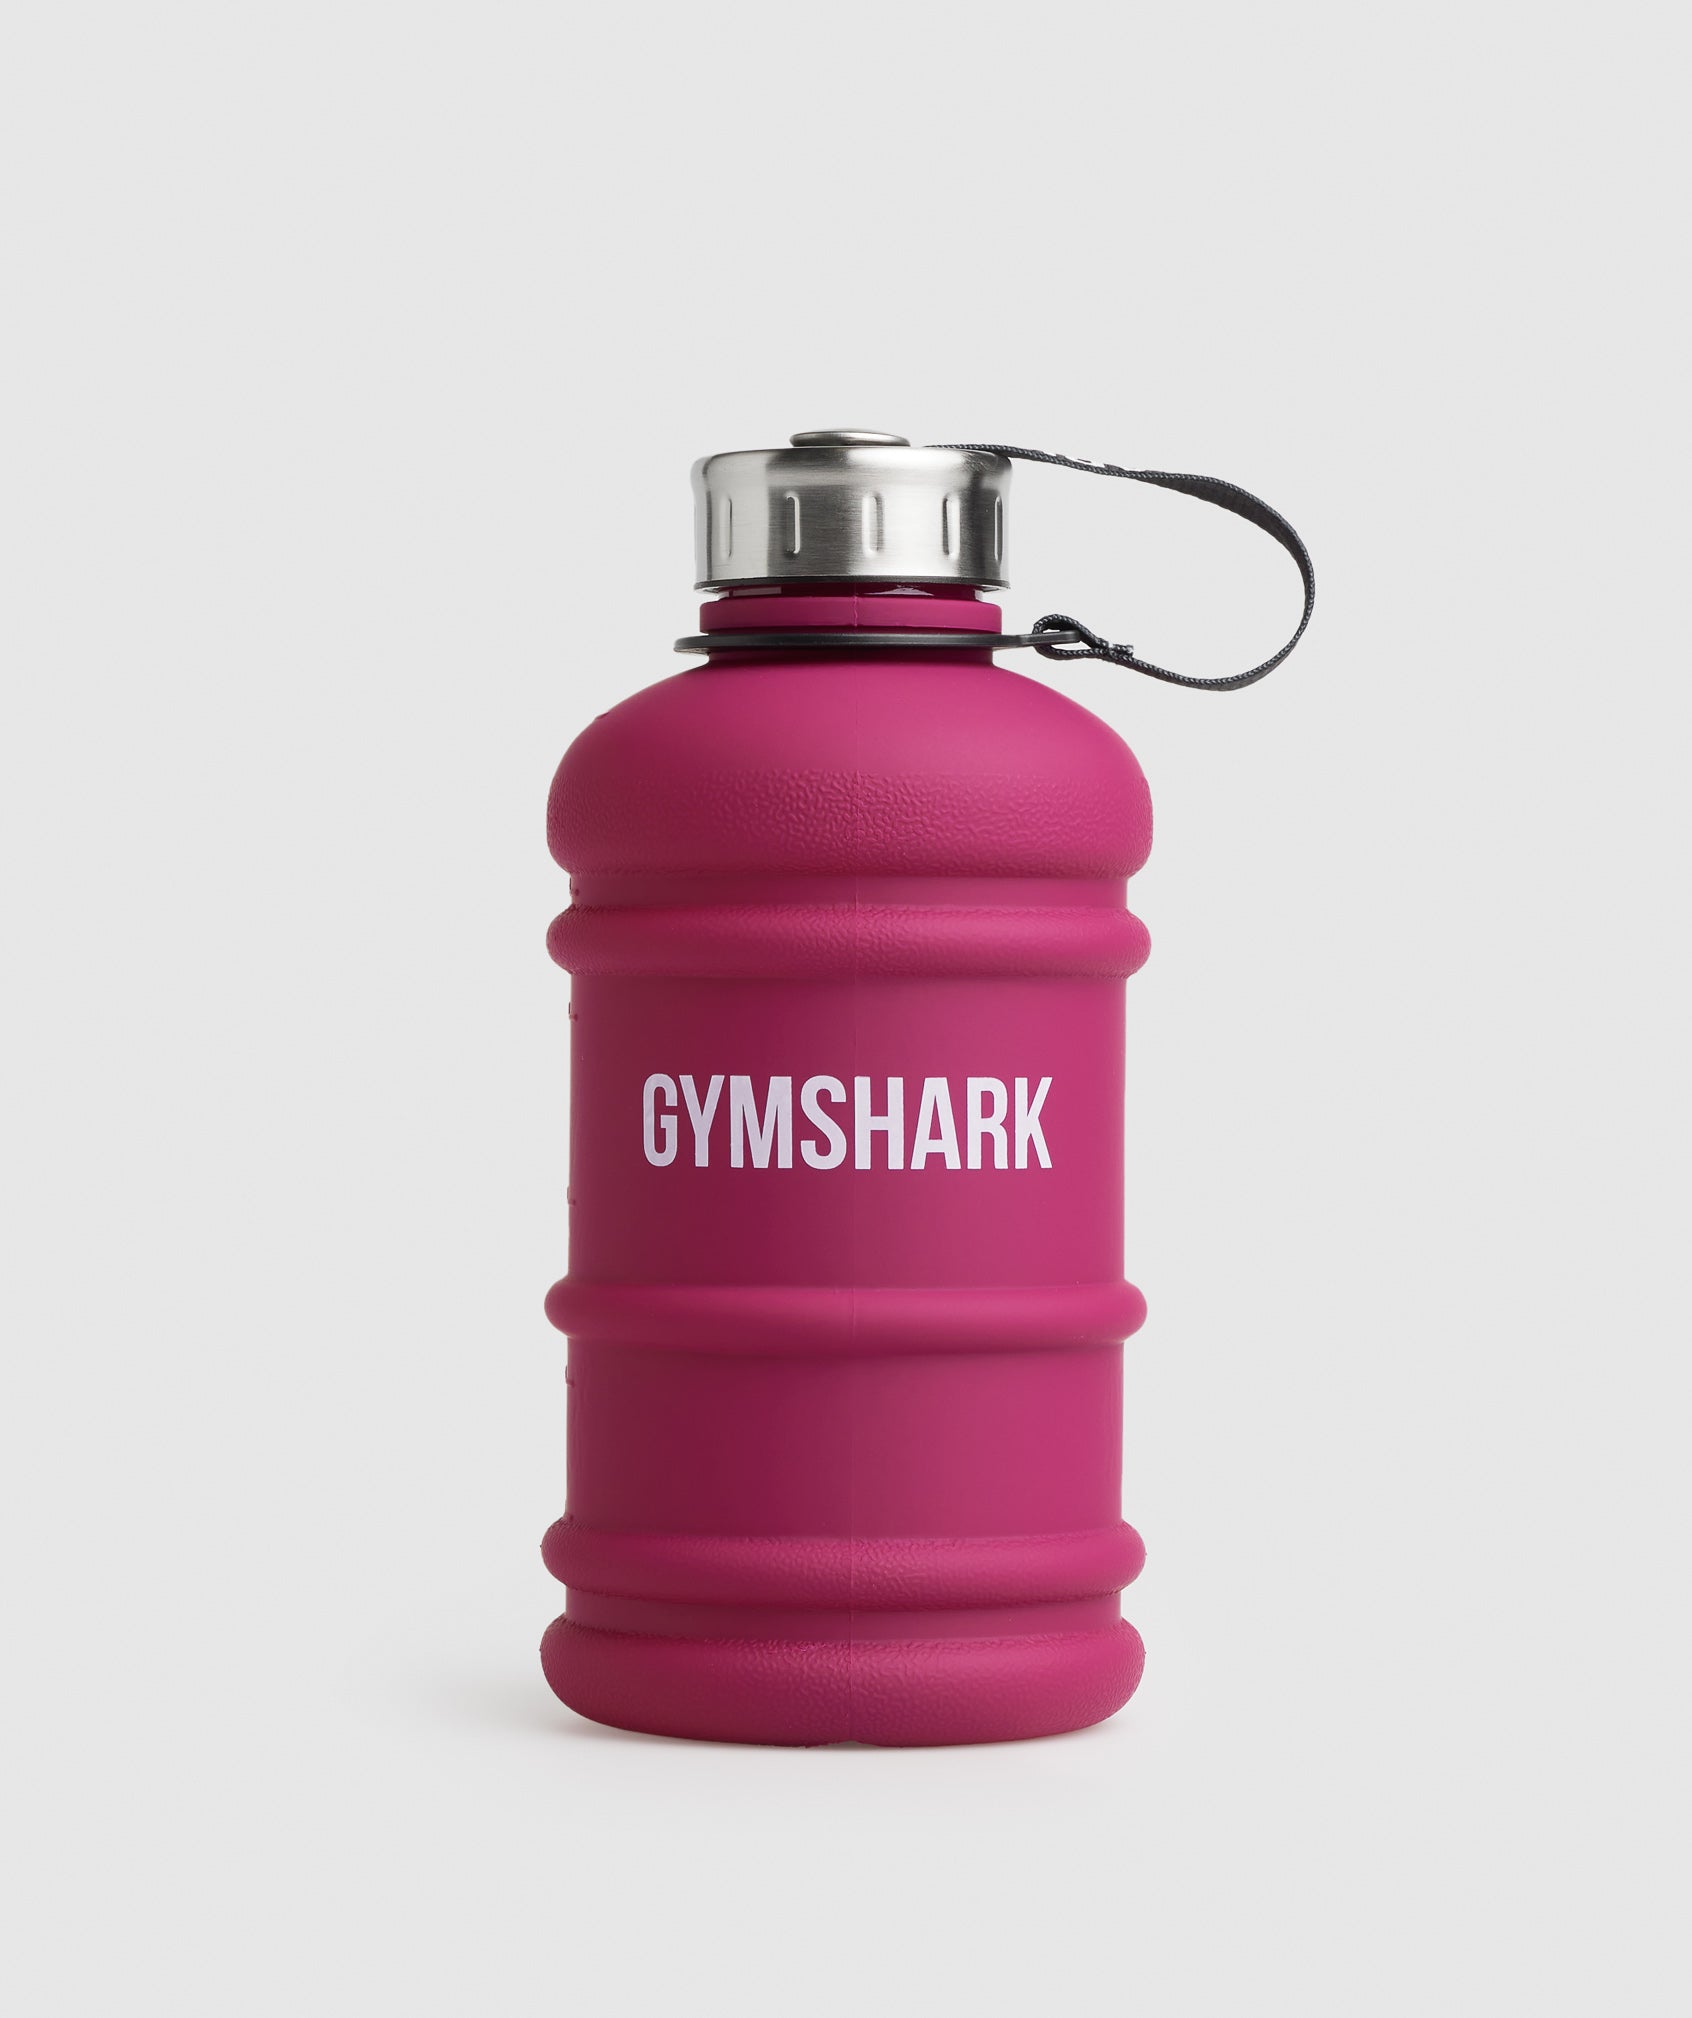 Water Creative - Prepared for progress. The new @gymshark